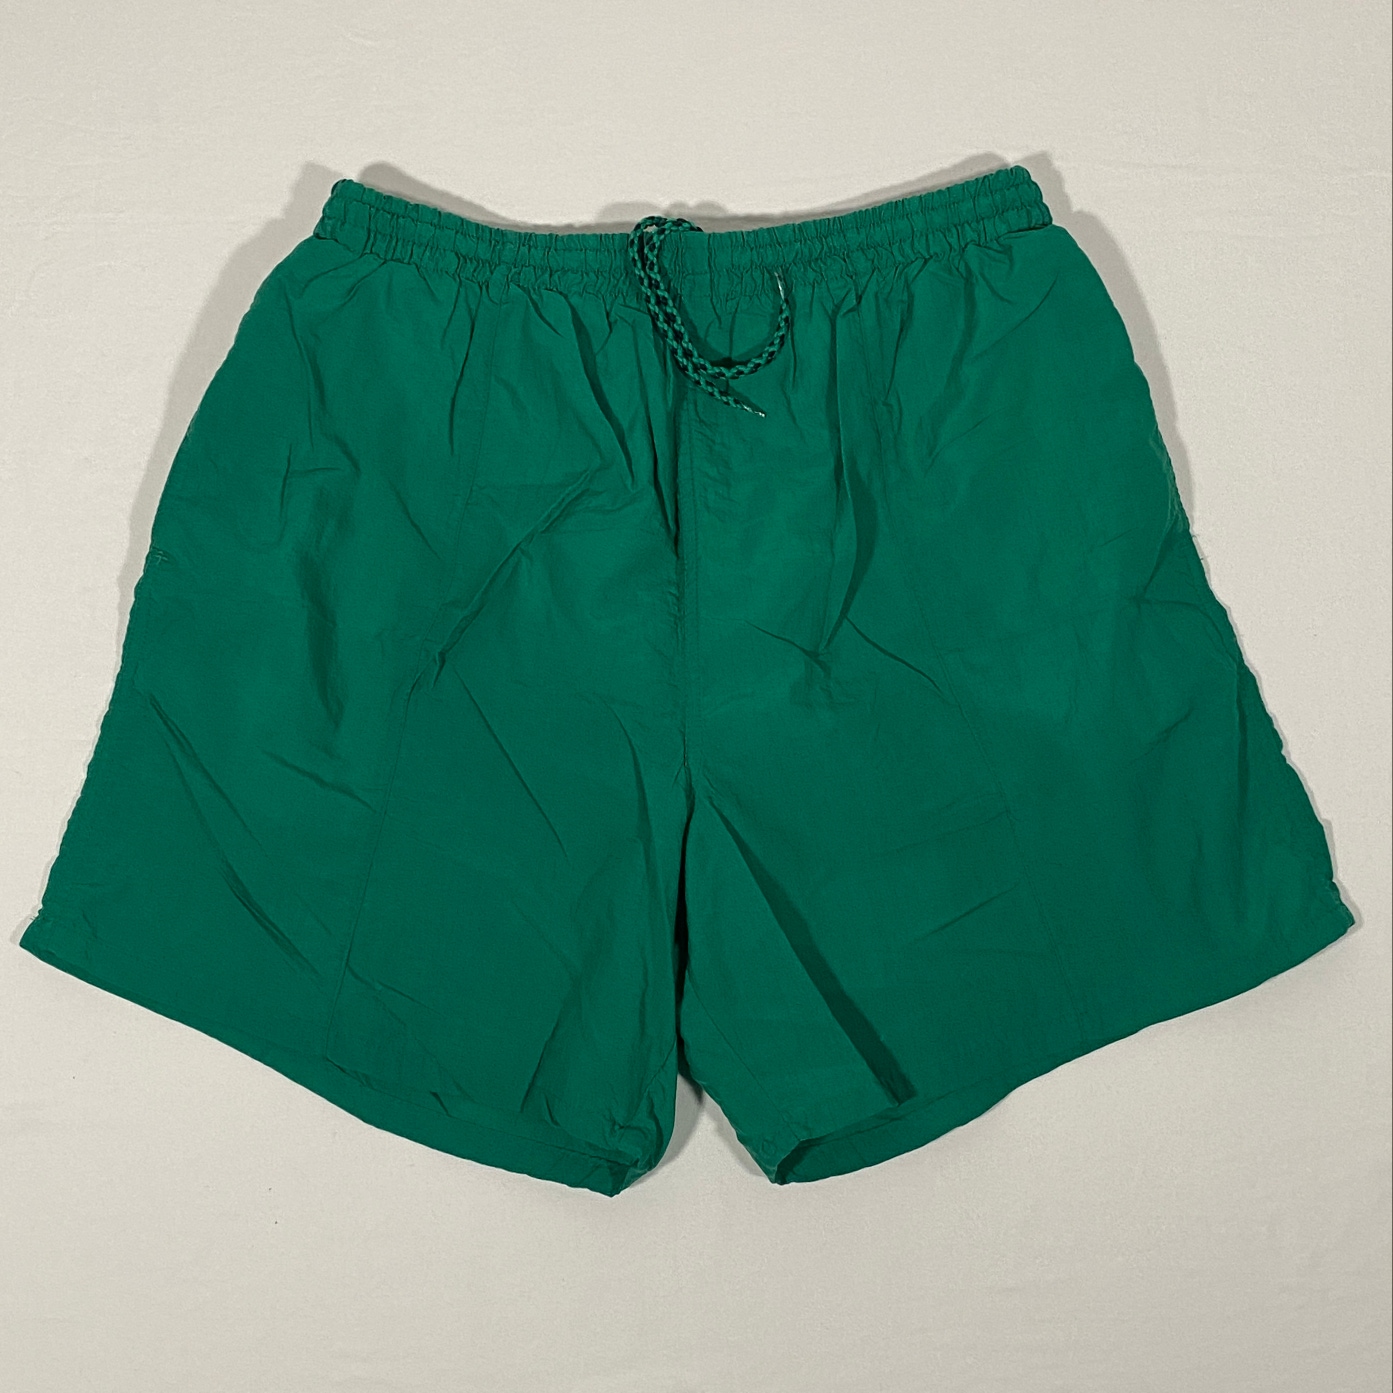 Basic Editions Men's Size L Green Mesh-Lined 100% Nylon Swimming Trunks/Shorts